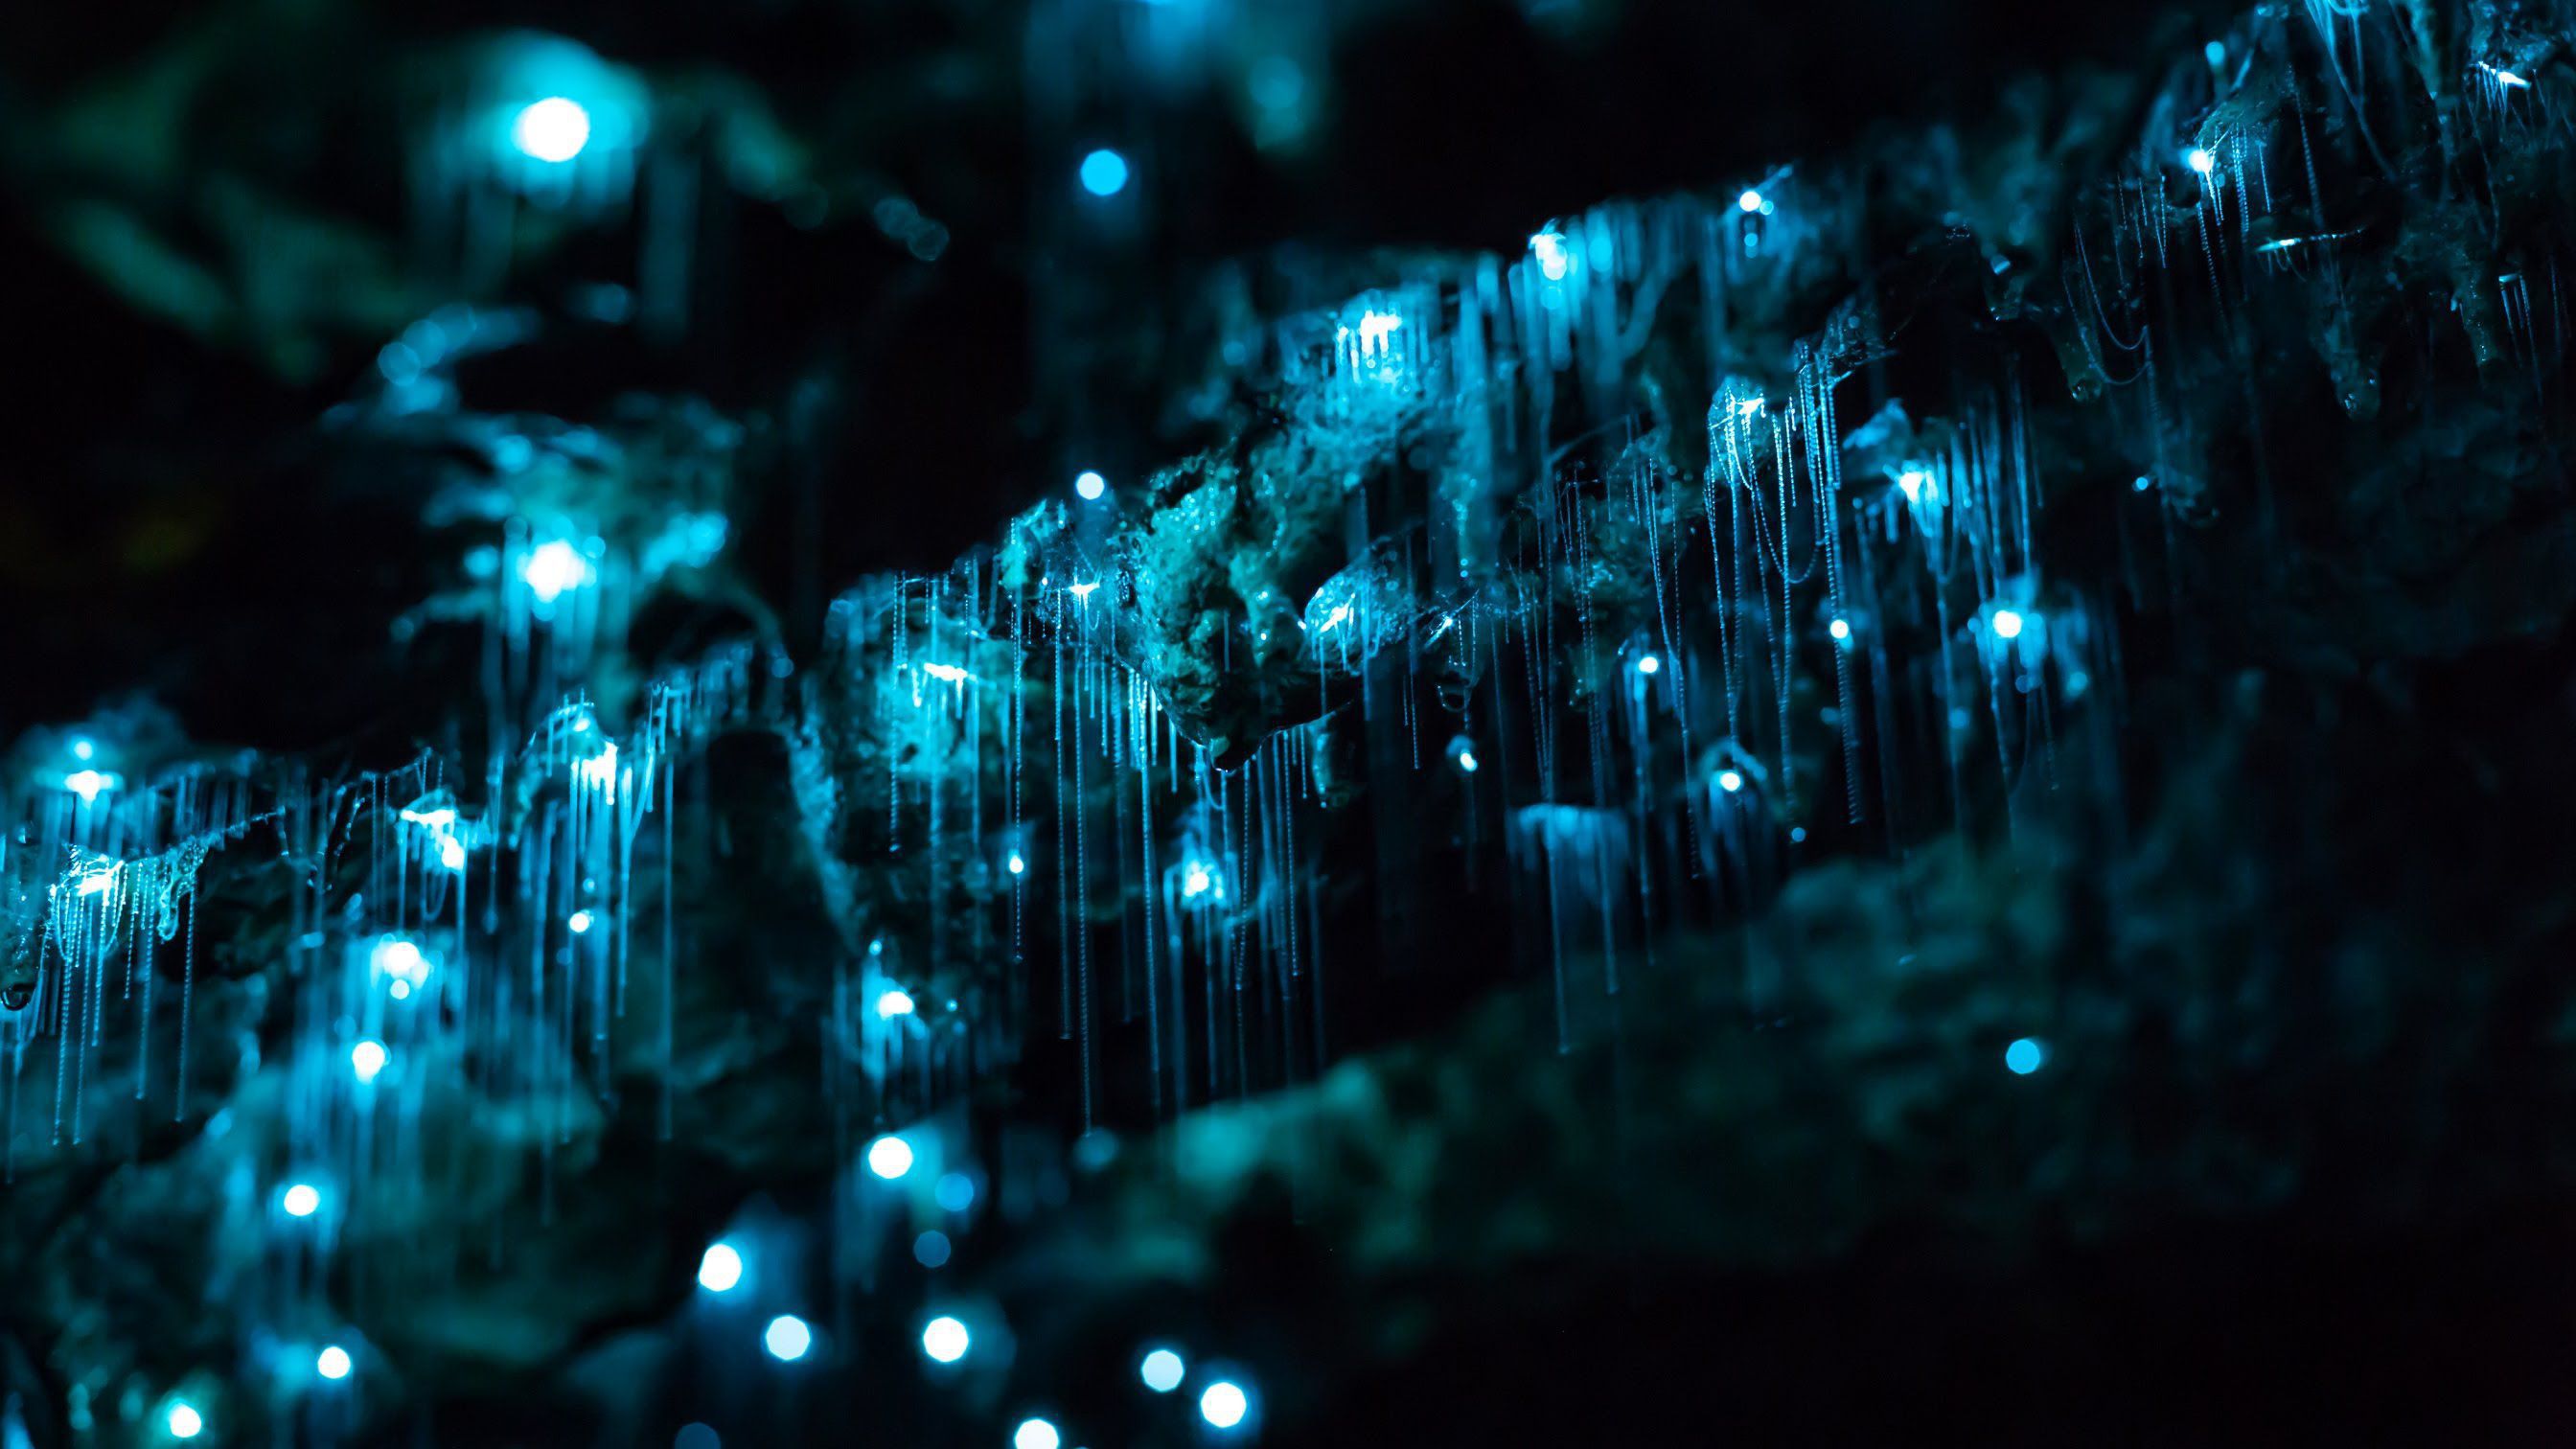 Illuminated Caves Hd